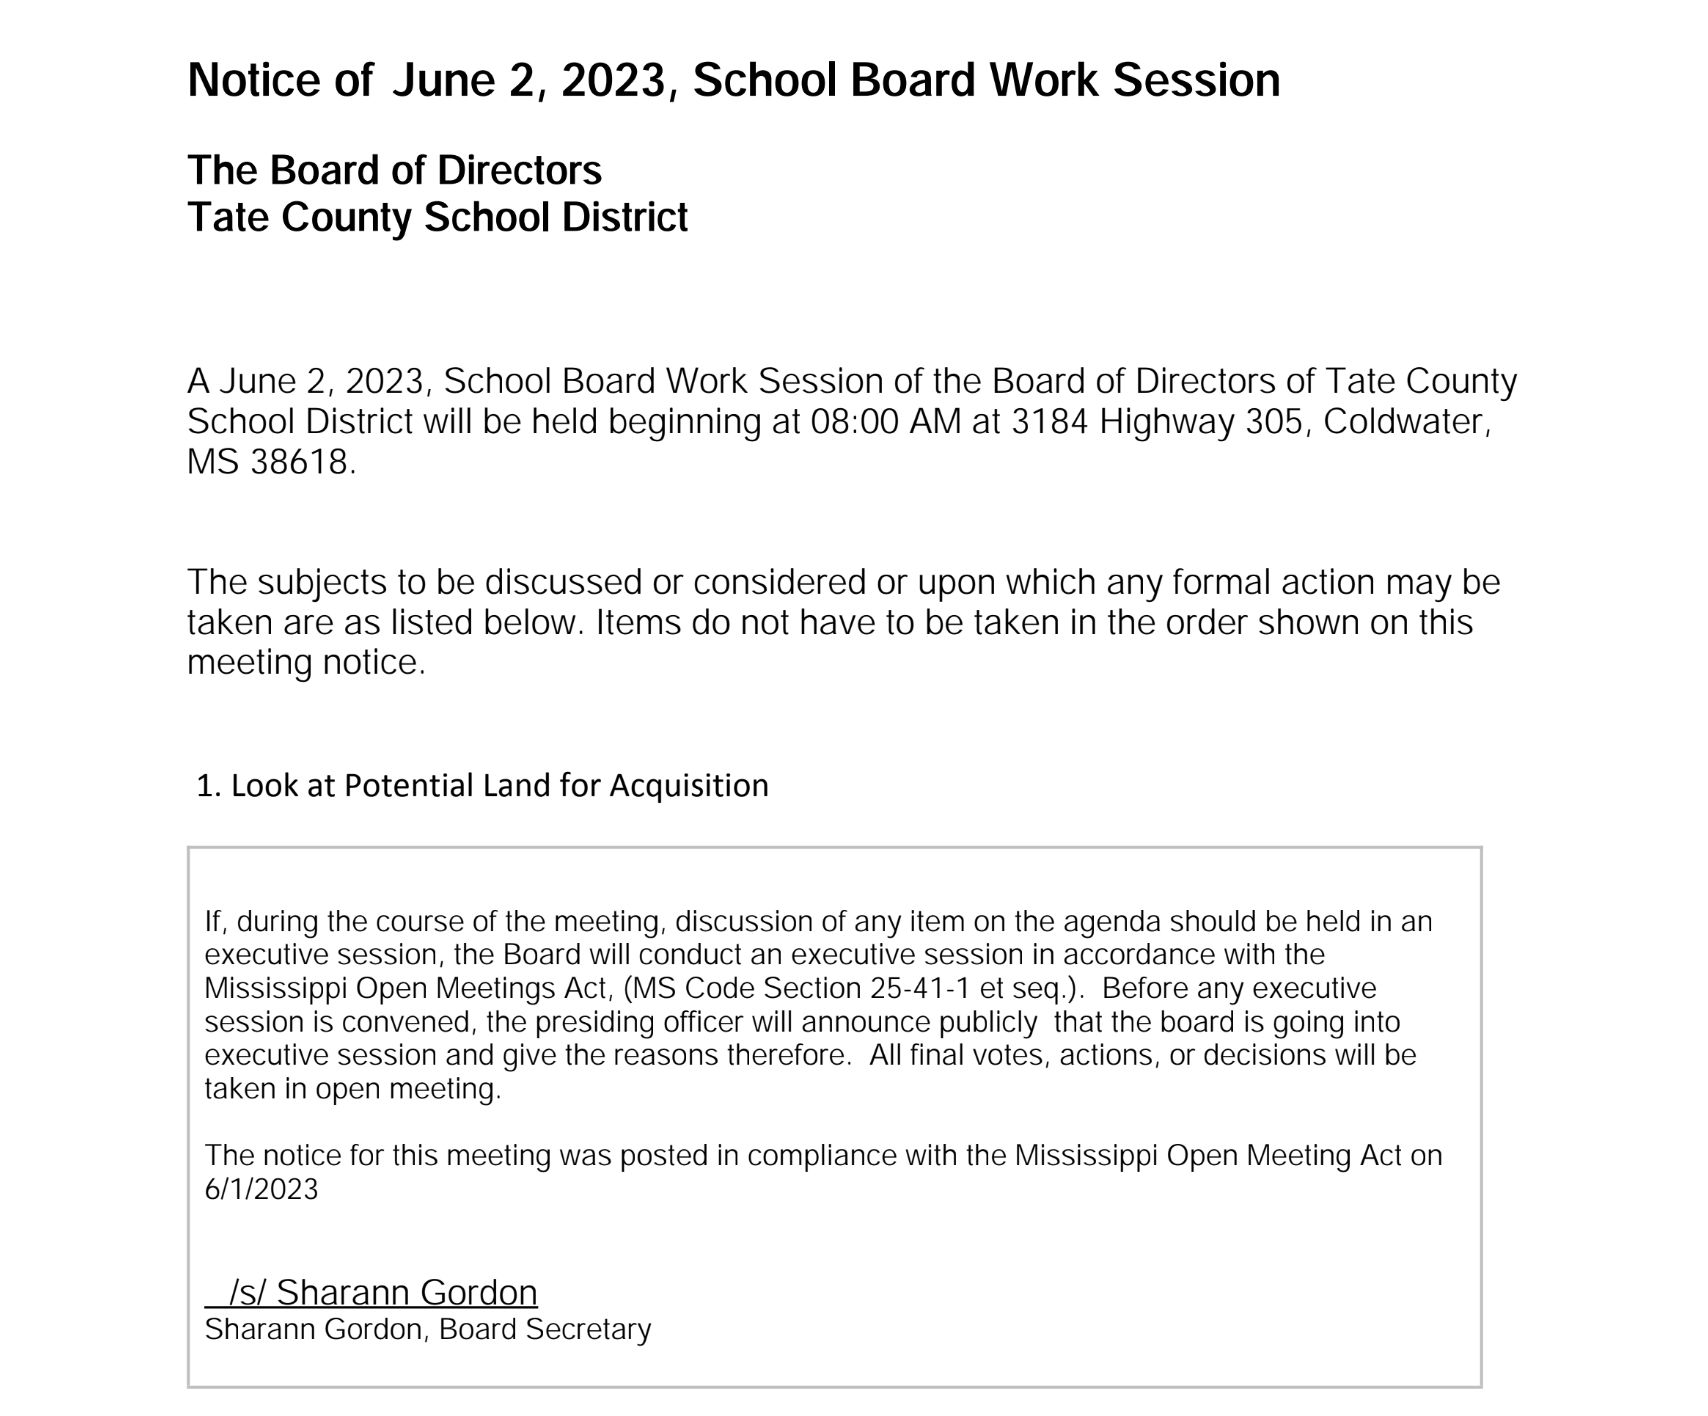 Notice of June 2 School Board Work Session